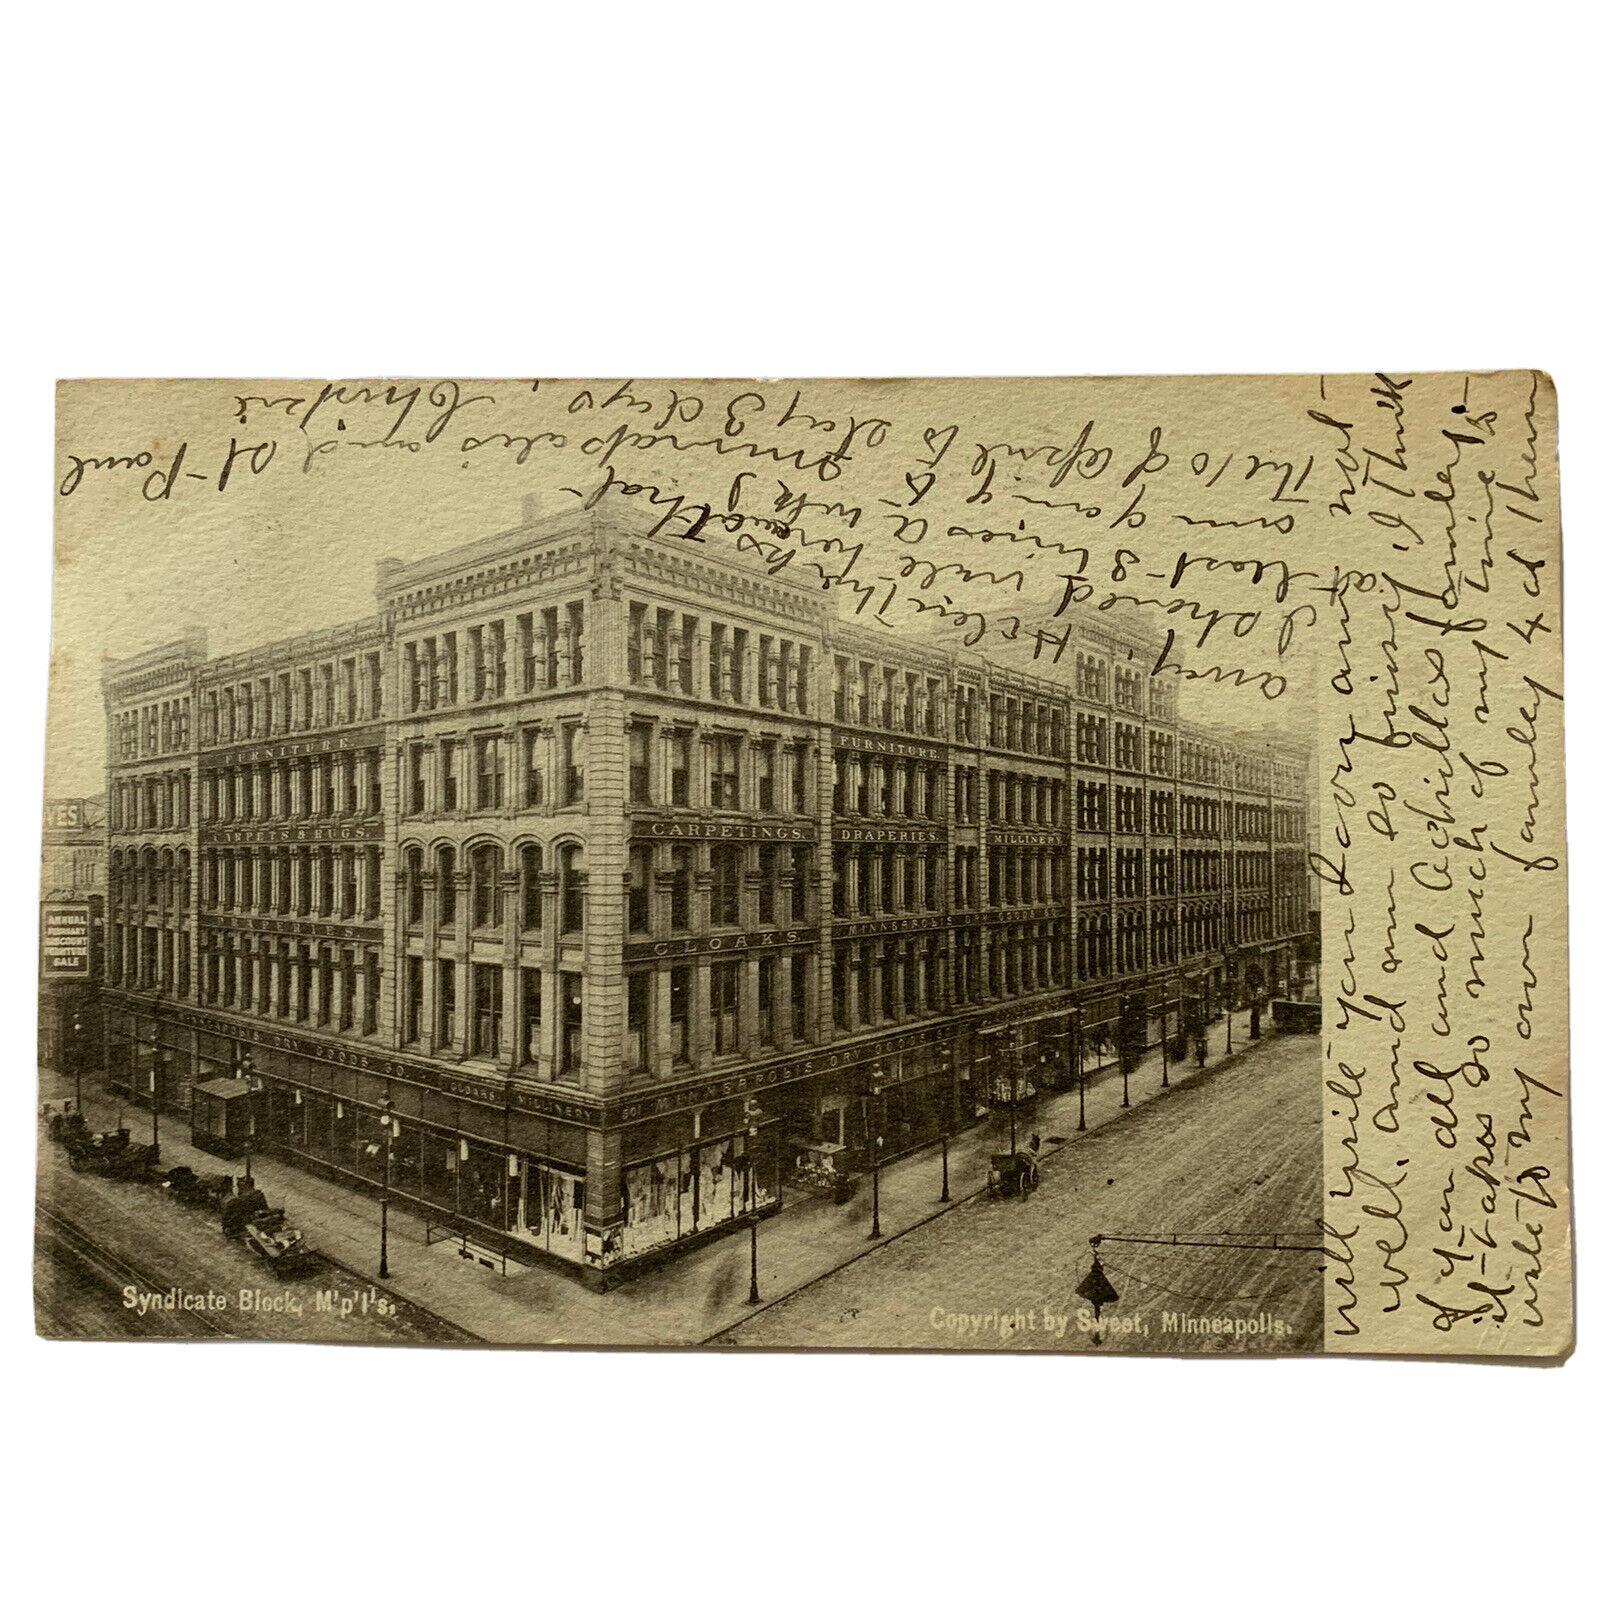 Antique Postcard Syndicate, Minneapolis Cloaks Goods Building 1907 Postmark